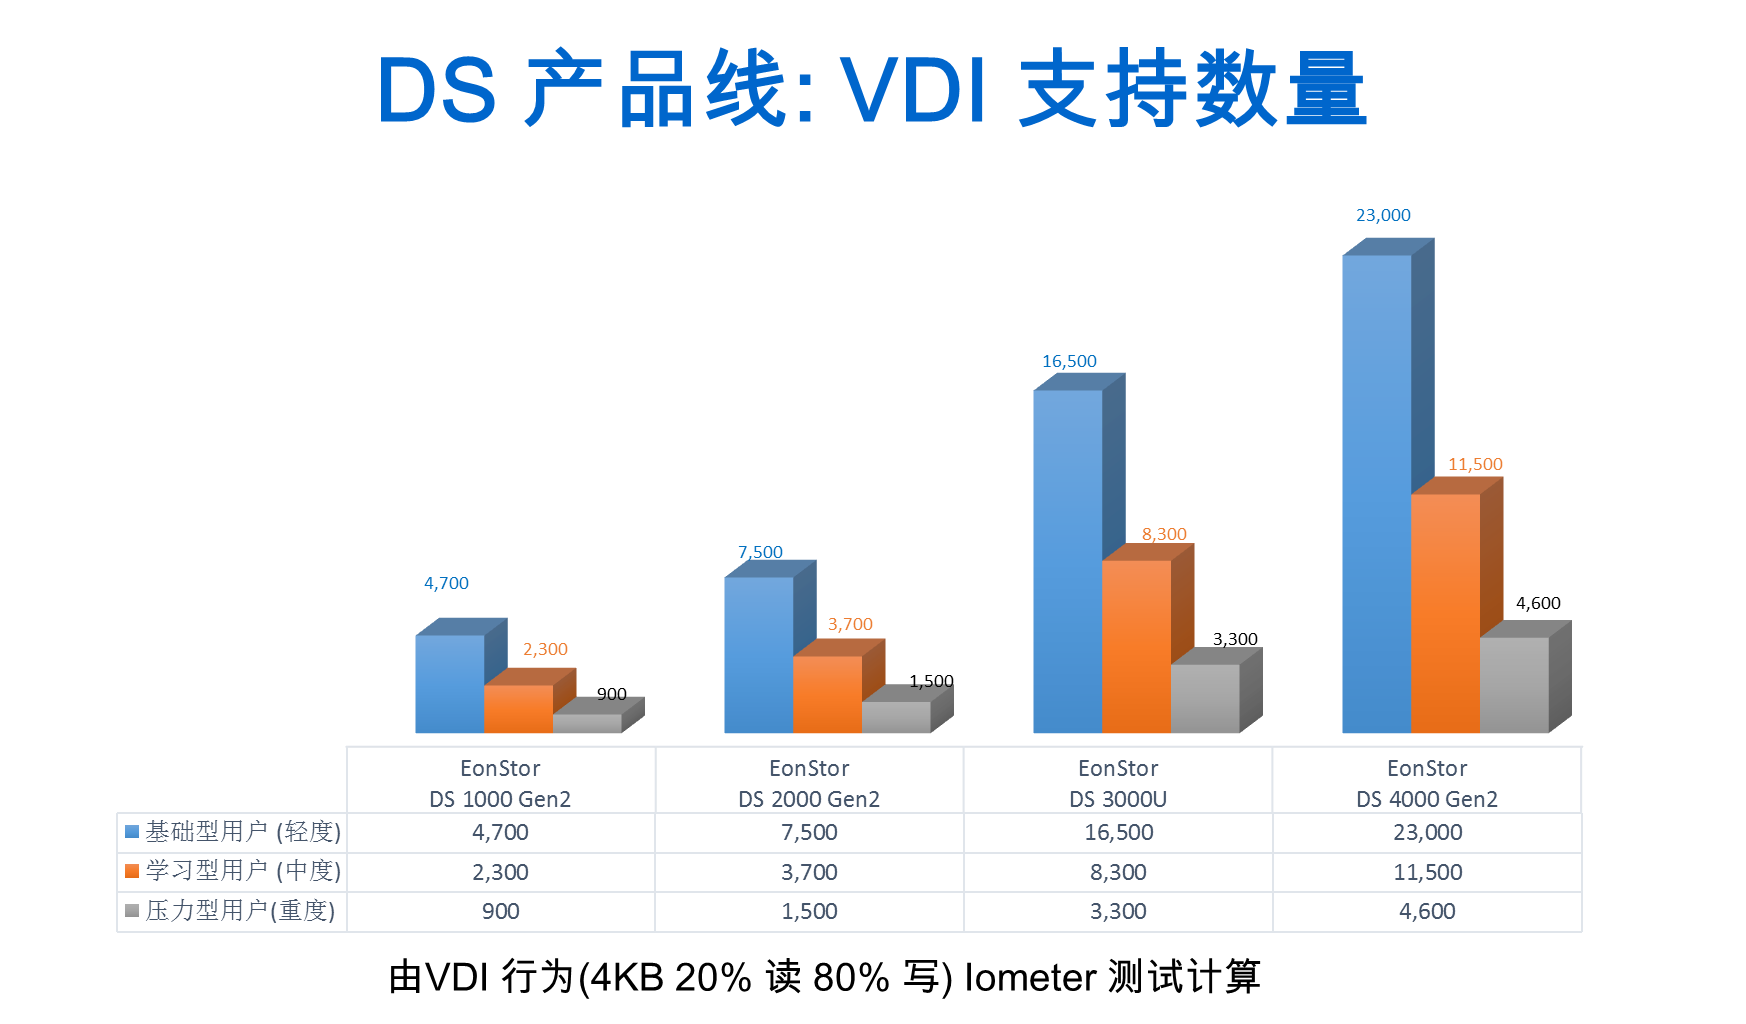 Infortrend VDI存储方案成功打入世界级光通信企业